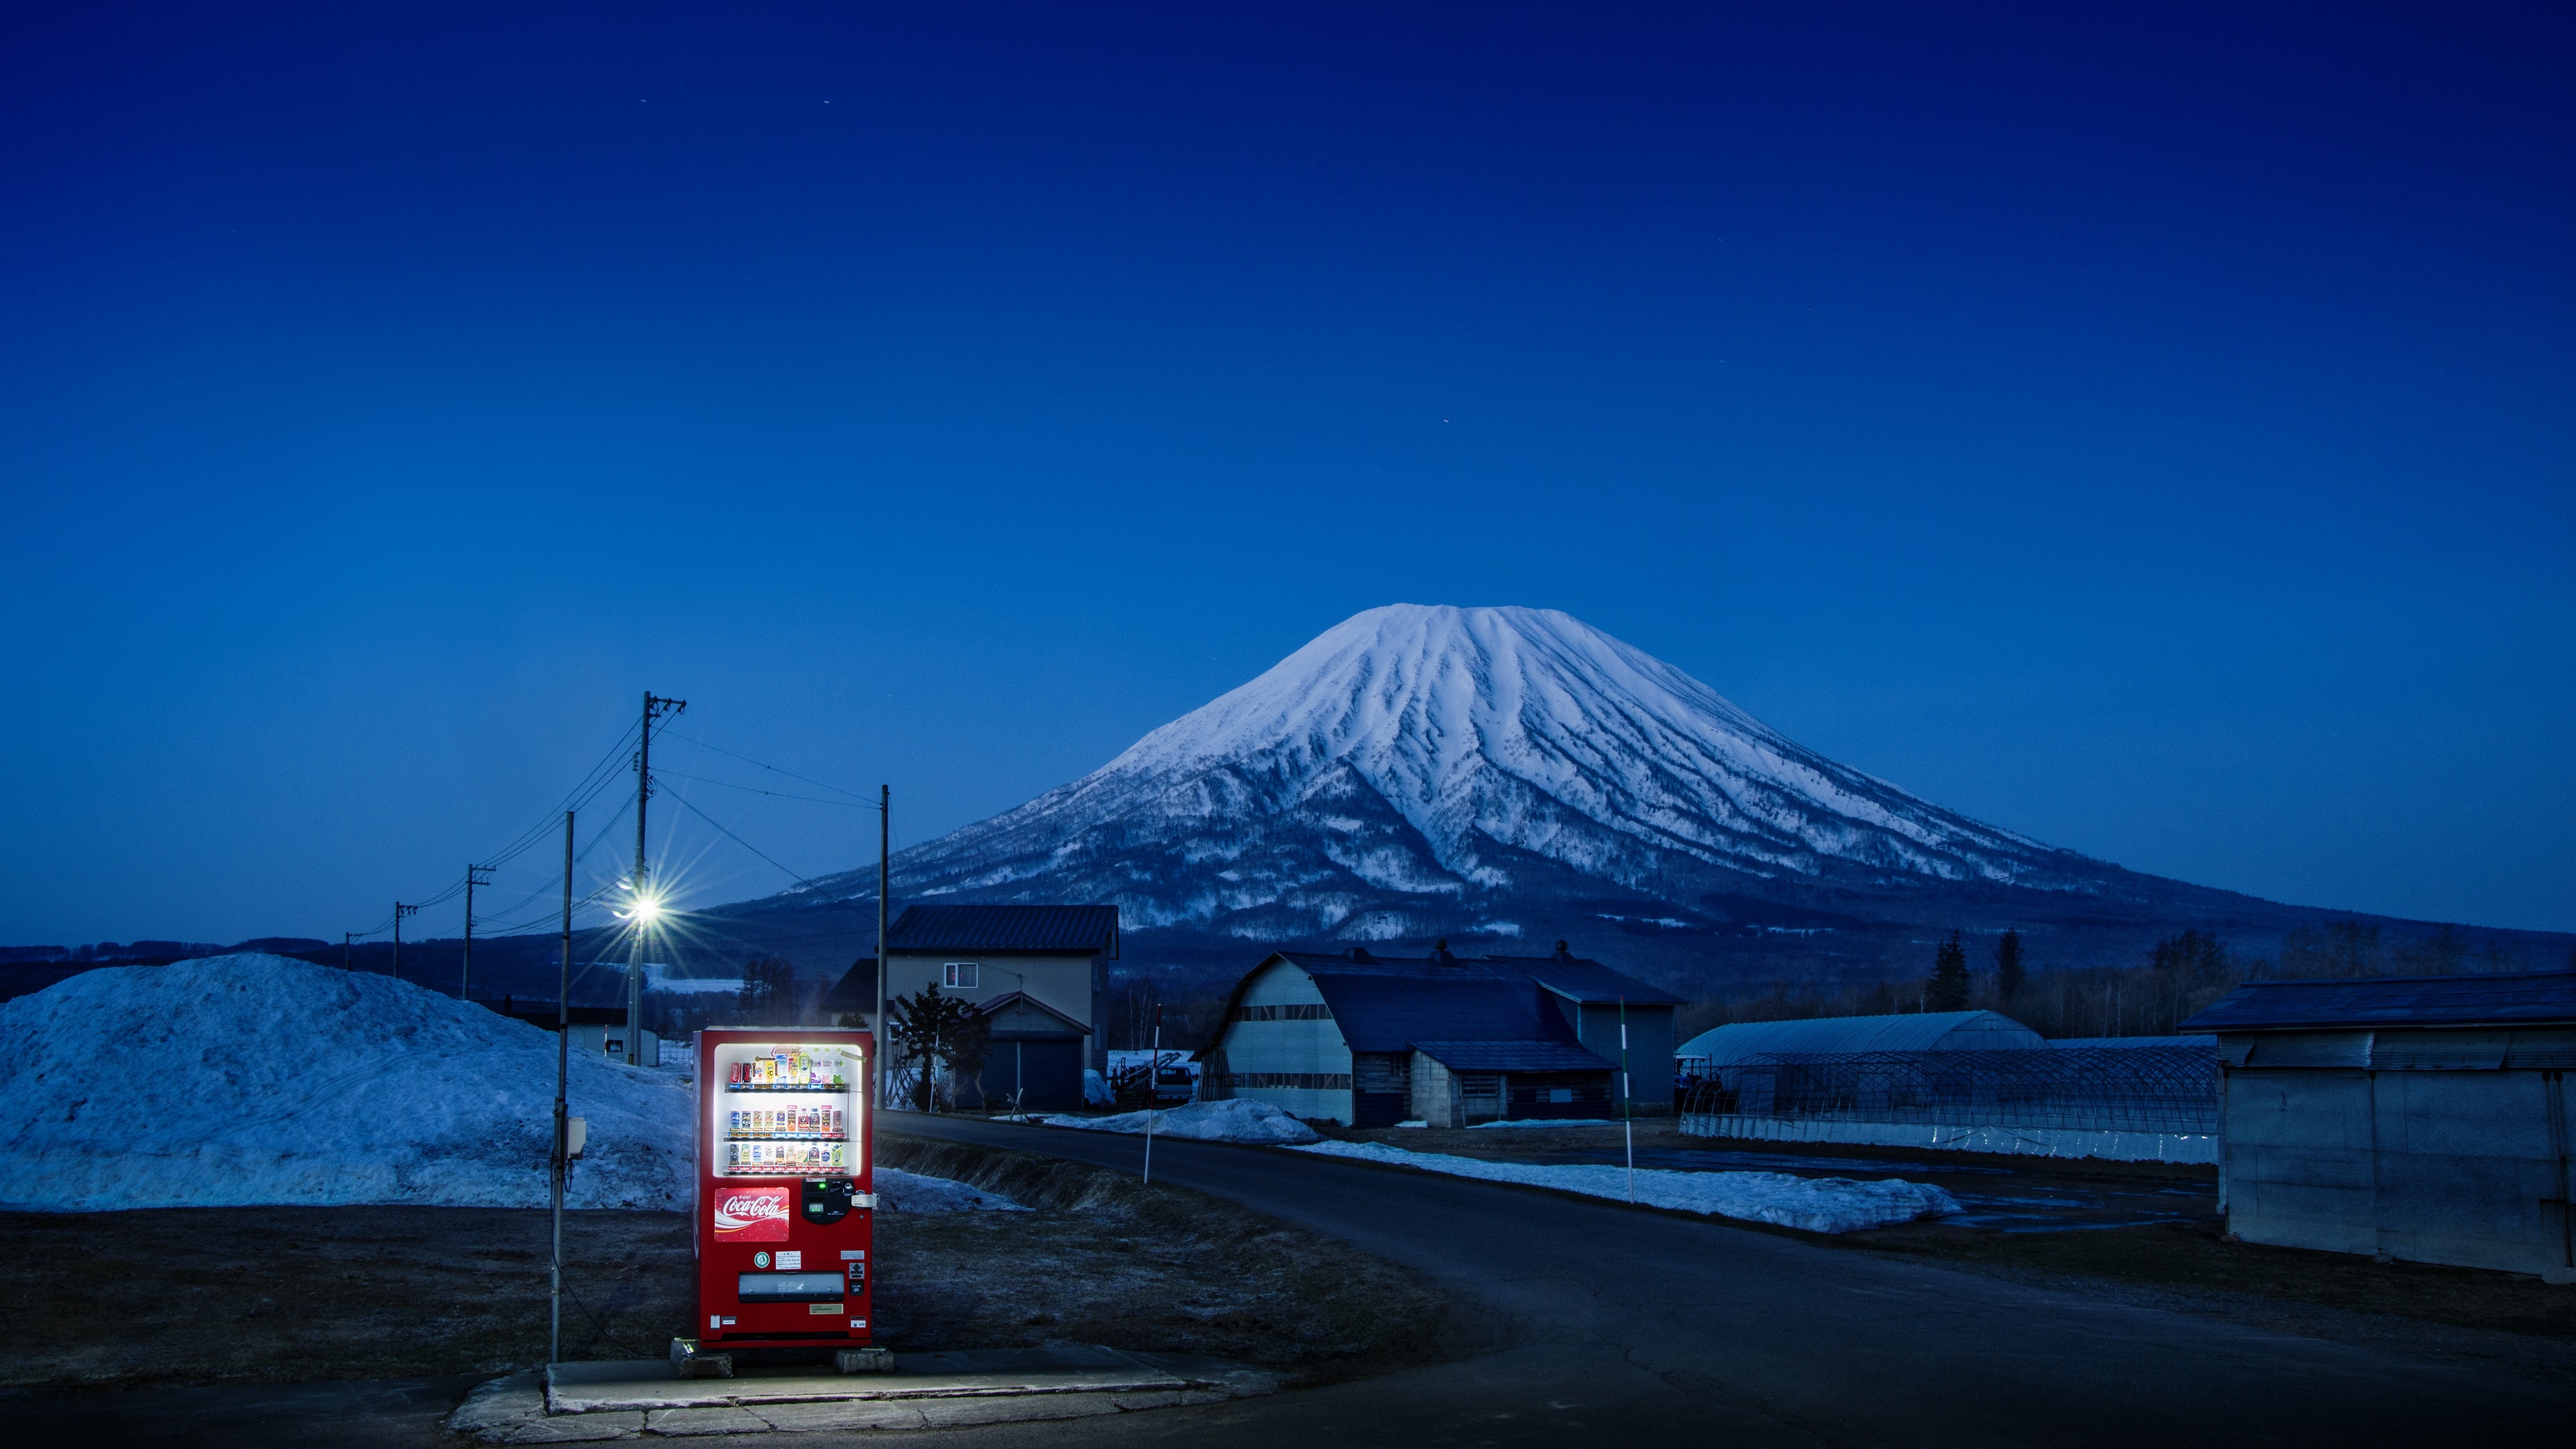 Lonesome Vending Machine by Eiji Ohashi